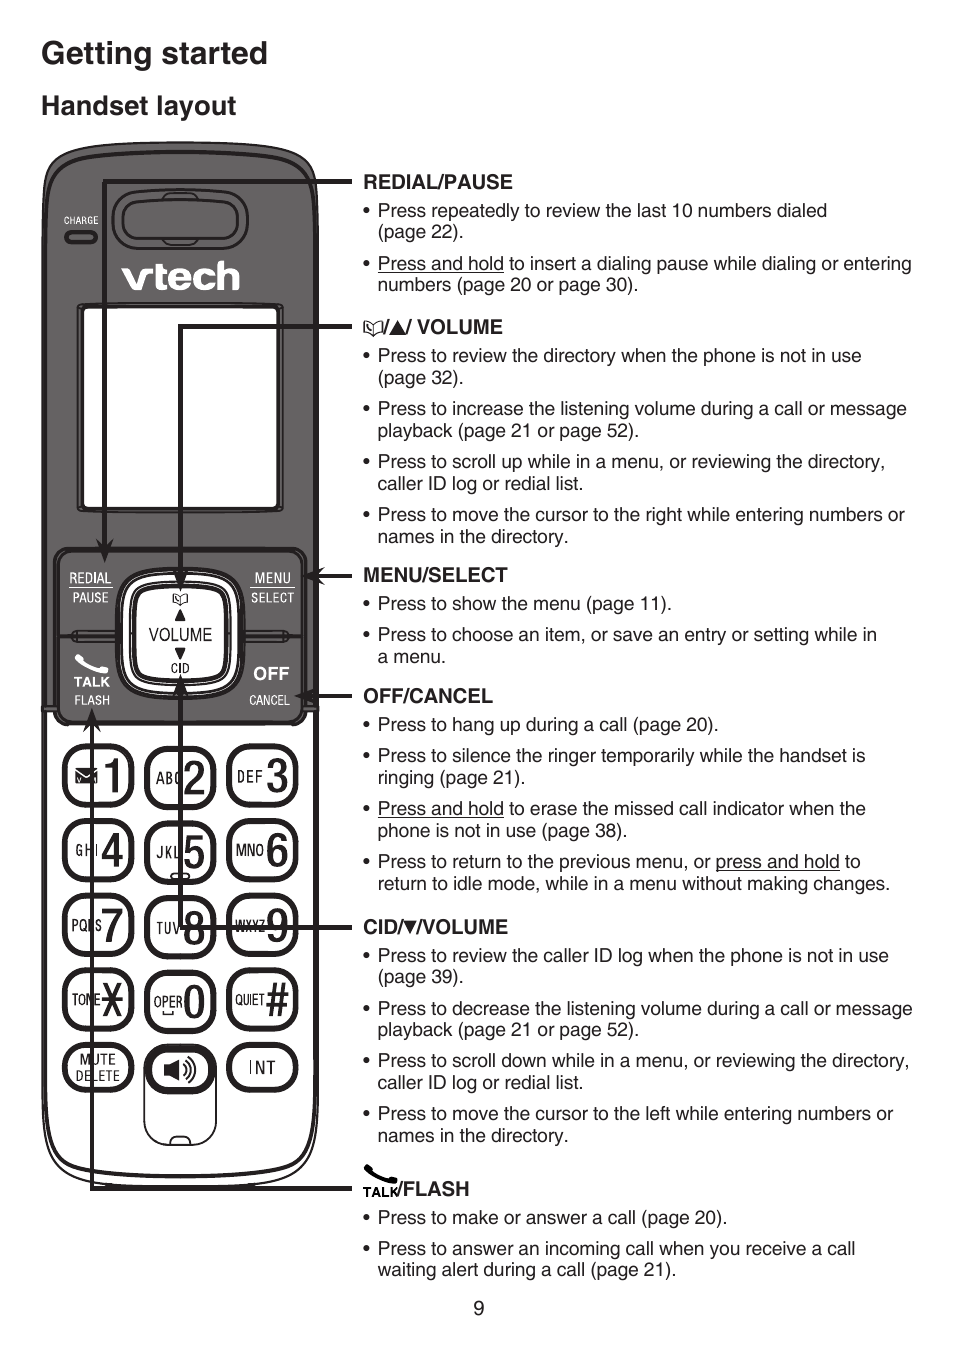 Getting started, Handset layout | VTech CS6719-2 Manual 